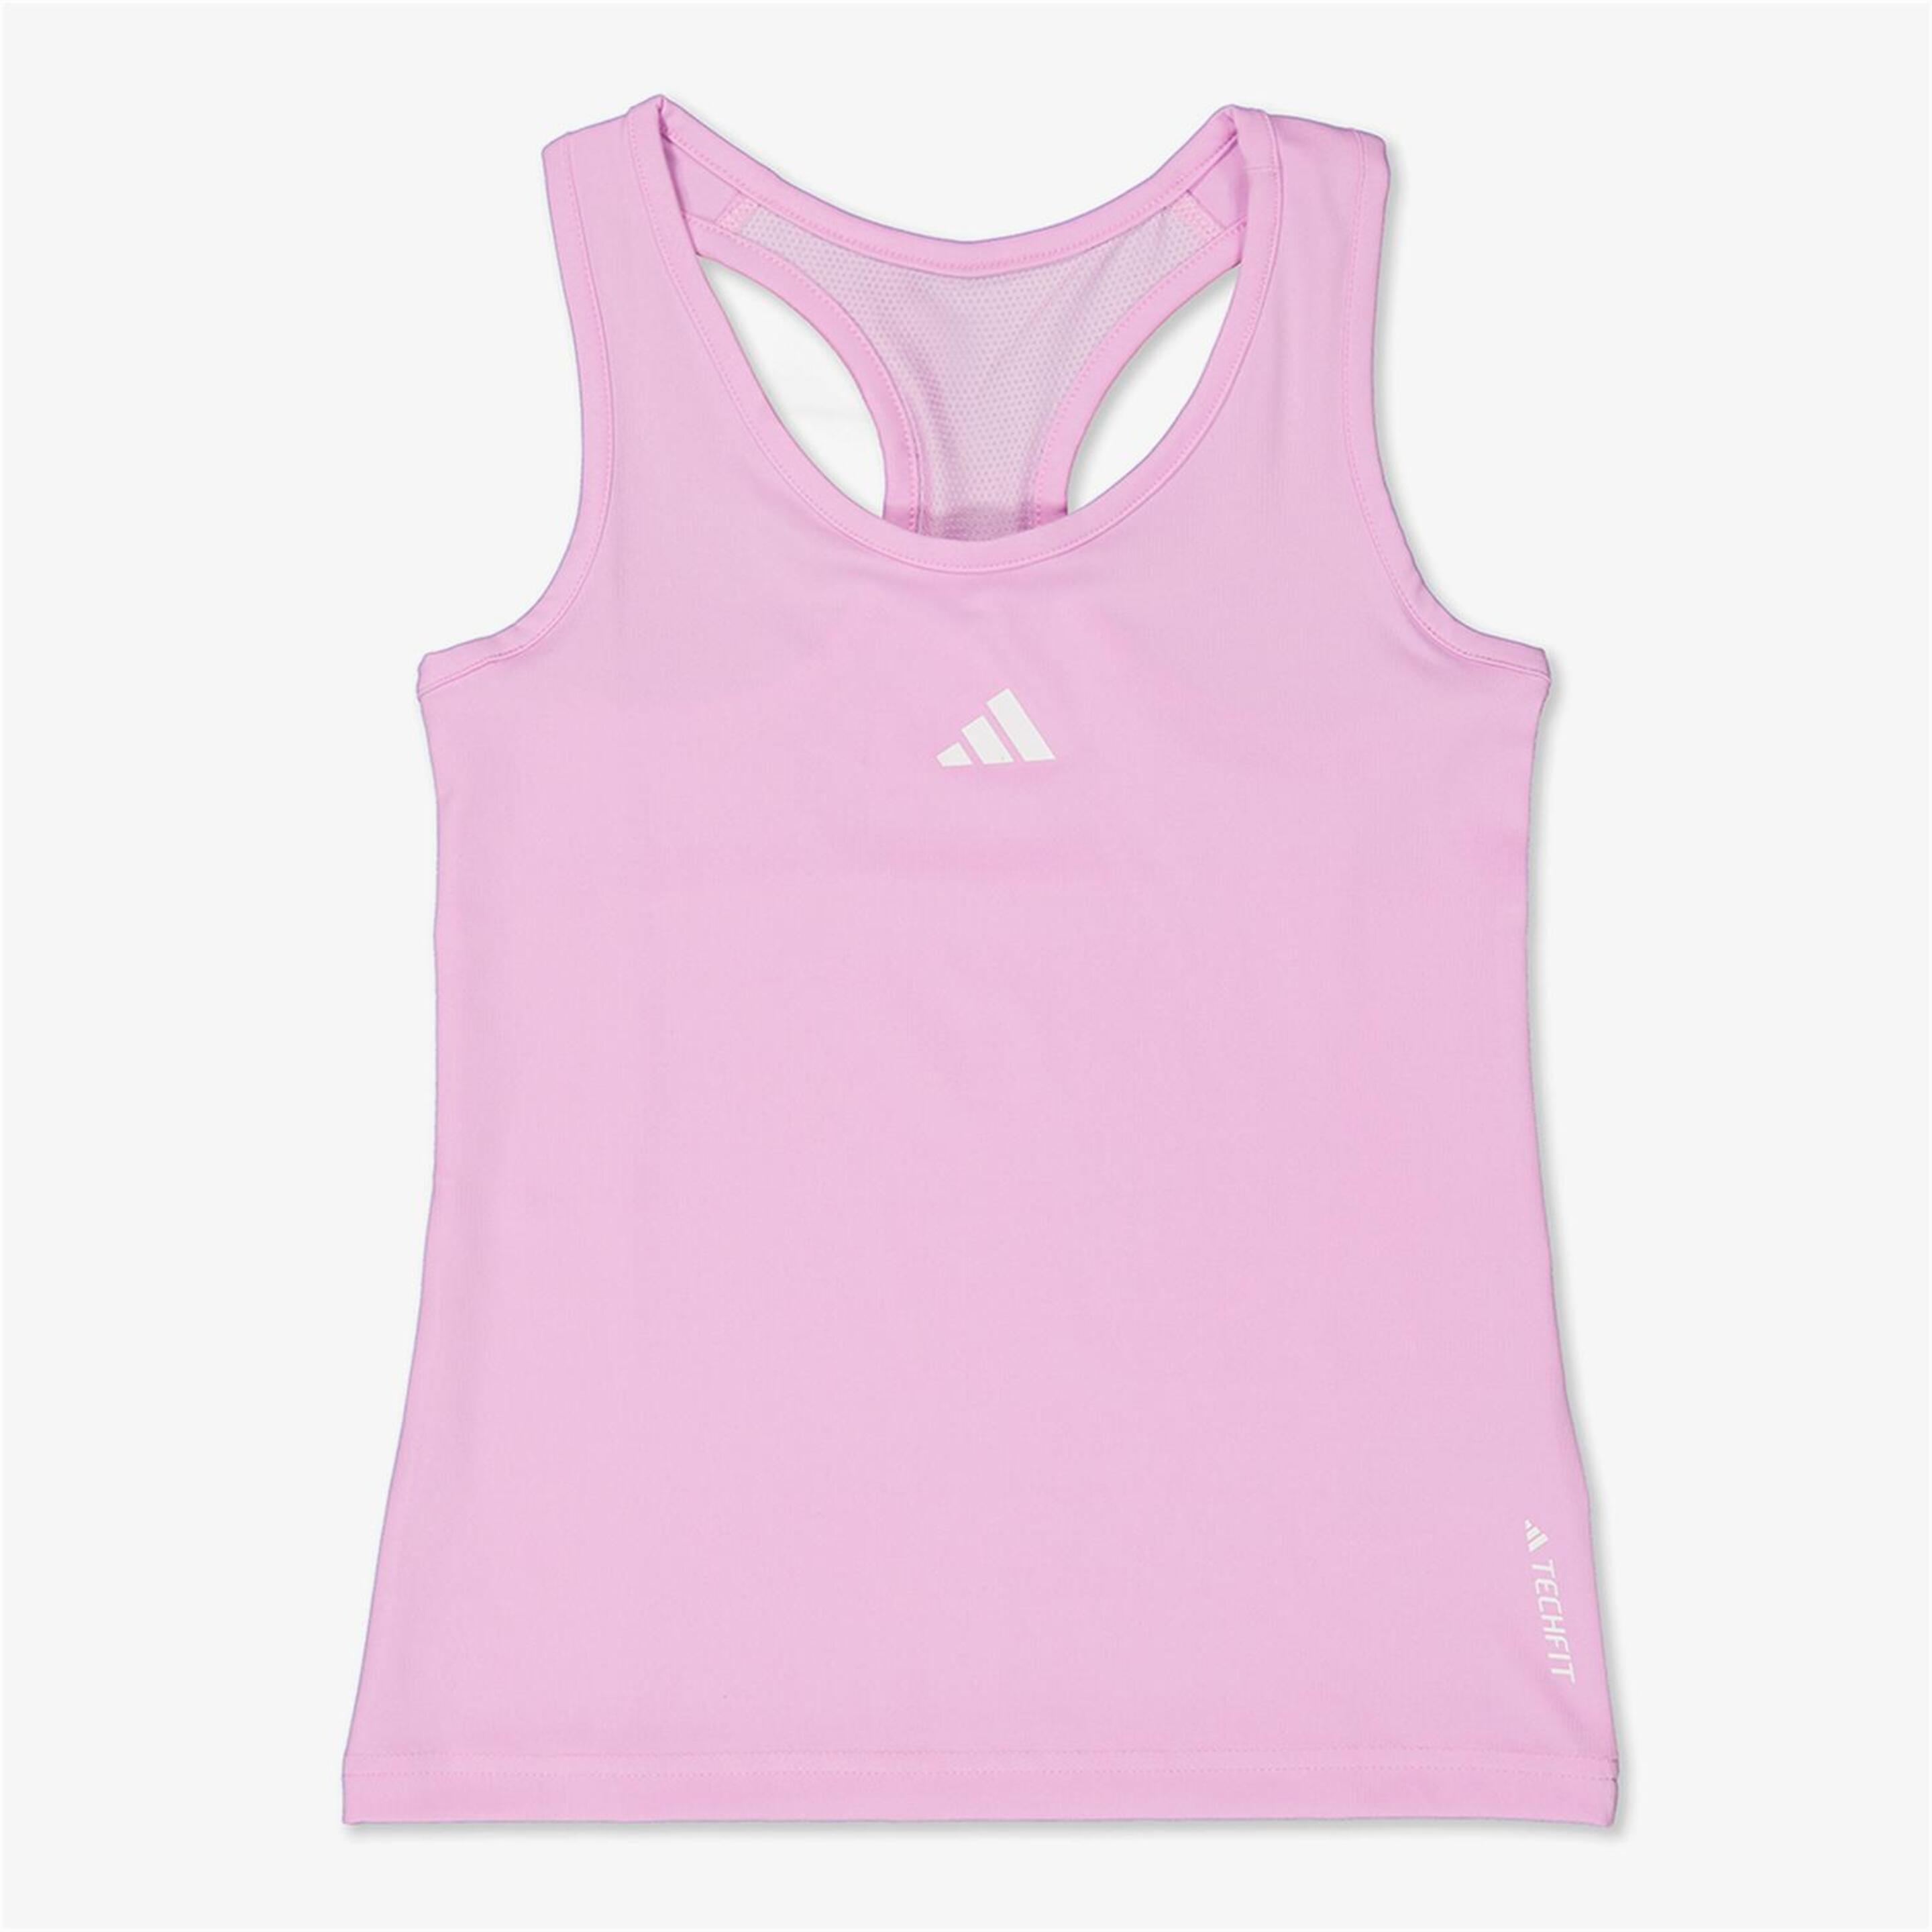 Camiseta adidas - rosa - Camiseta Fitness Mujer